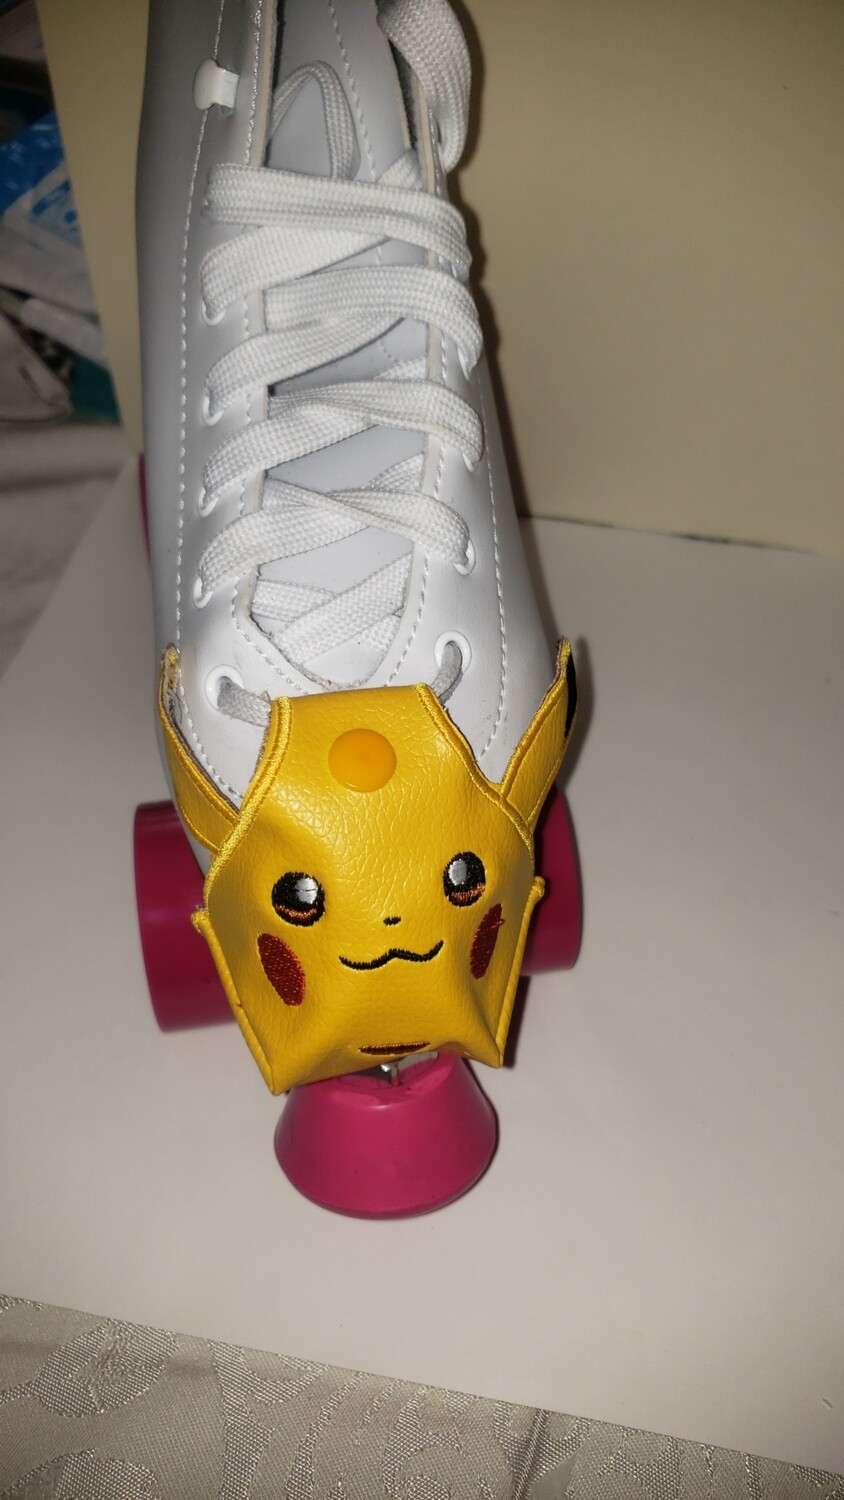 Pikachu Toe guards